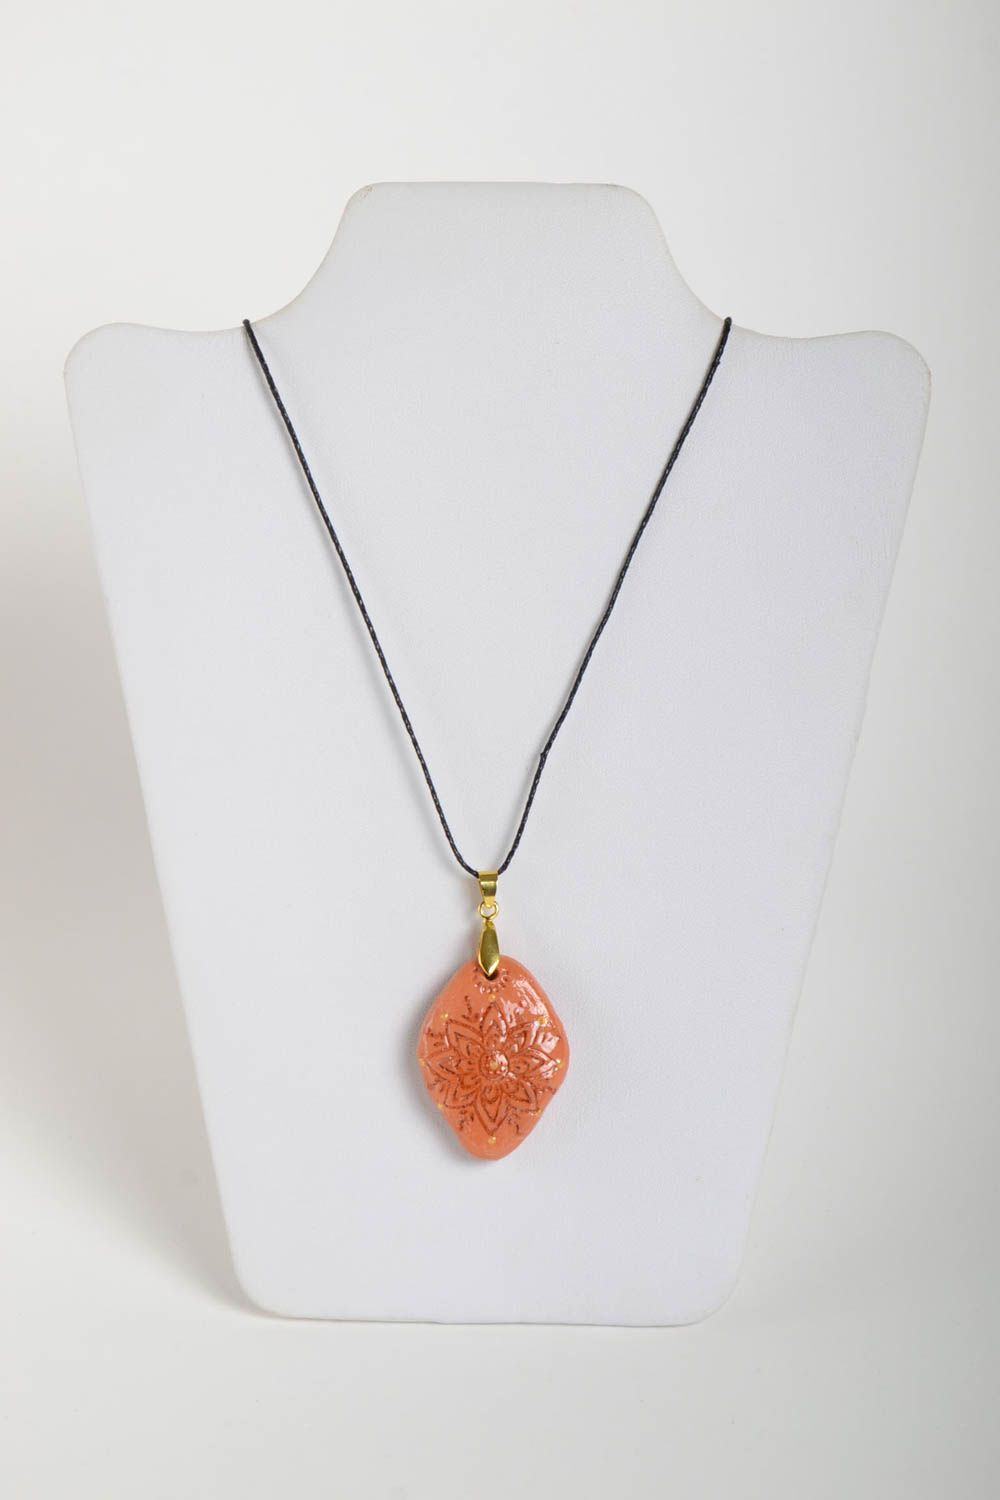 Handmade pendant designer accessory clay pendant unusual jewelry gift for her photo 2